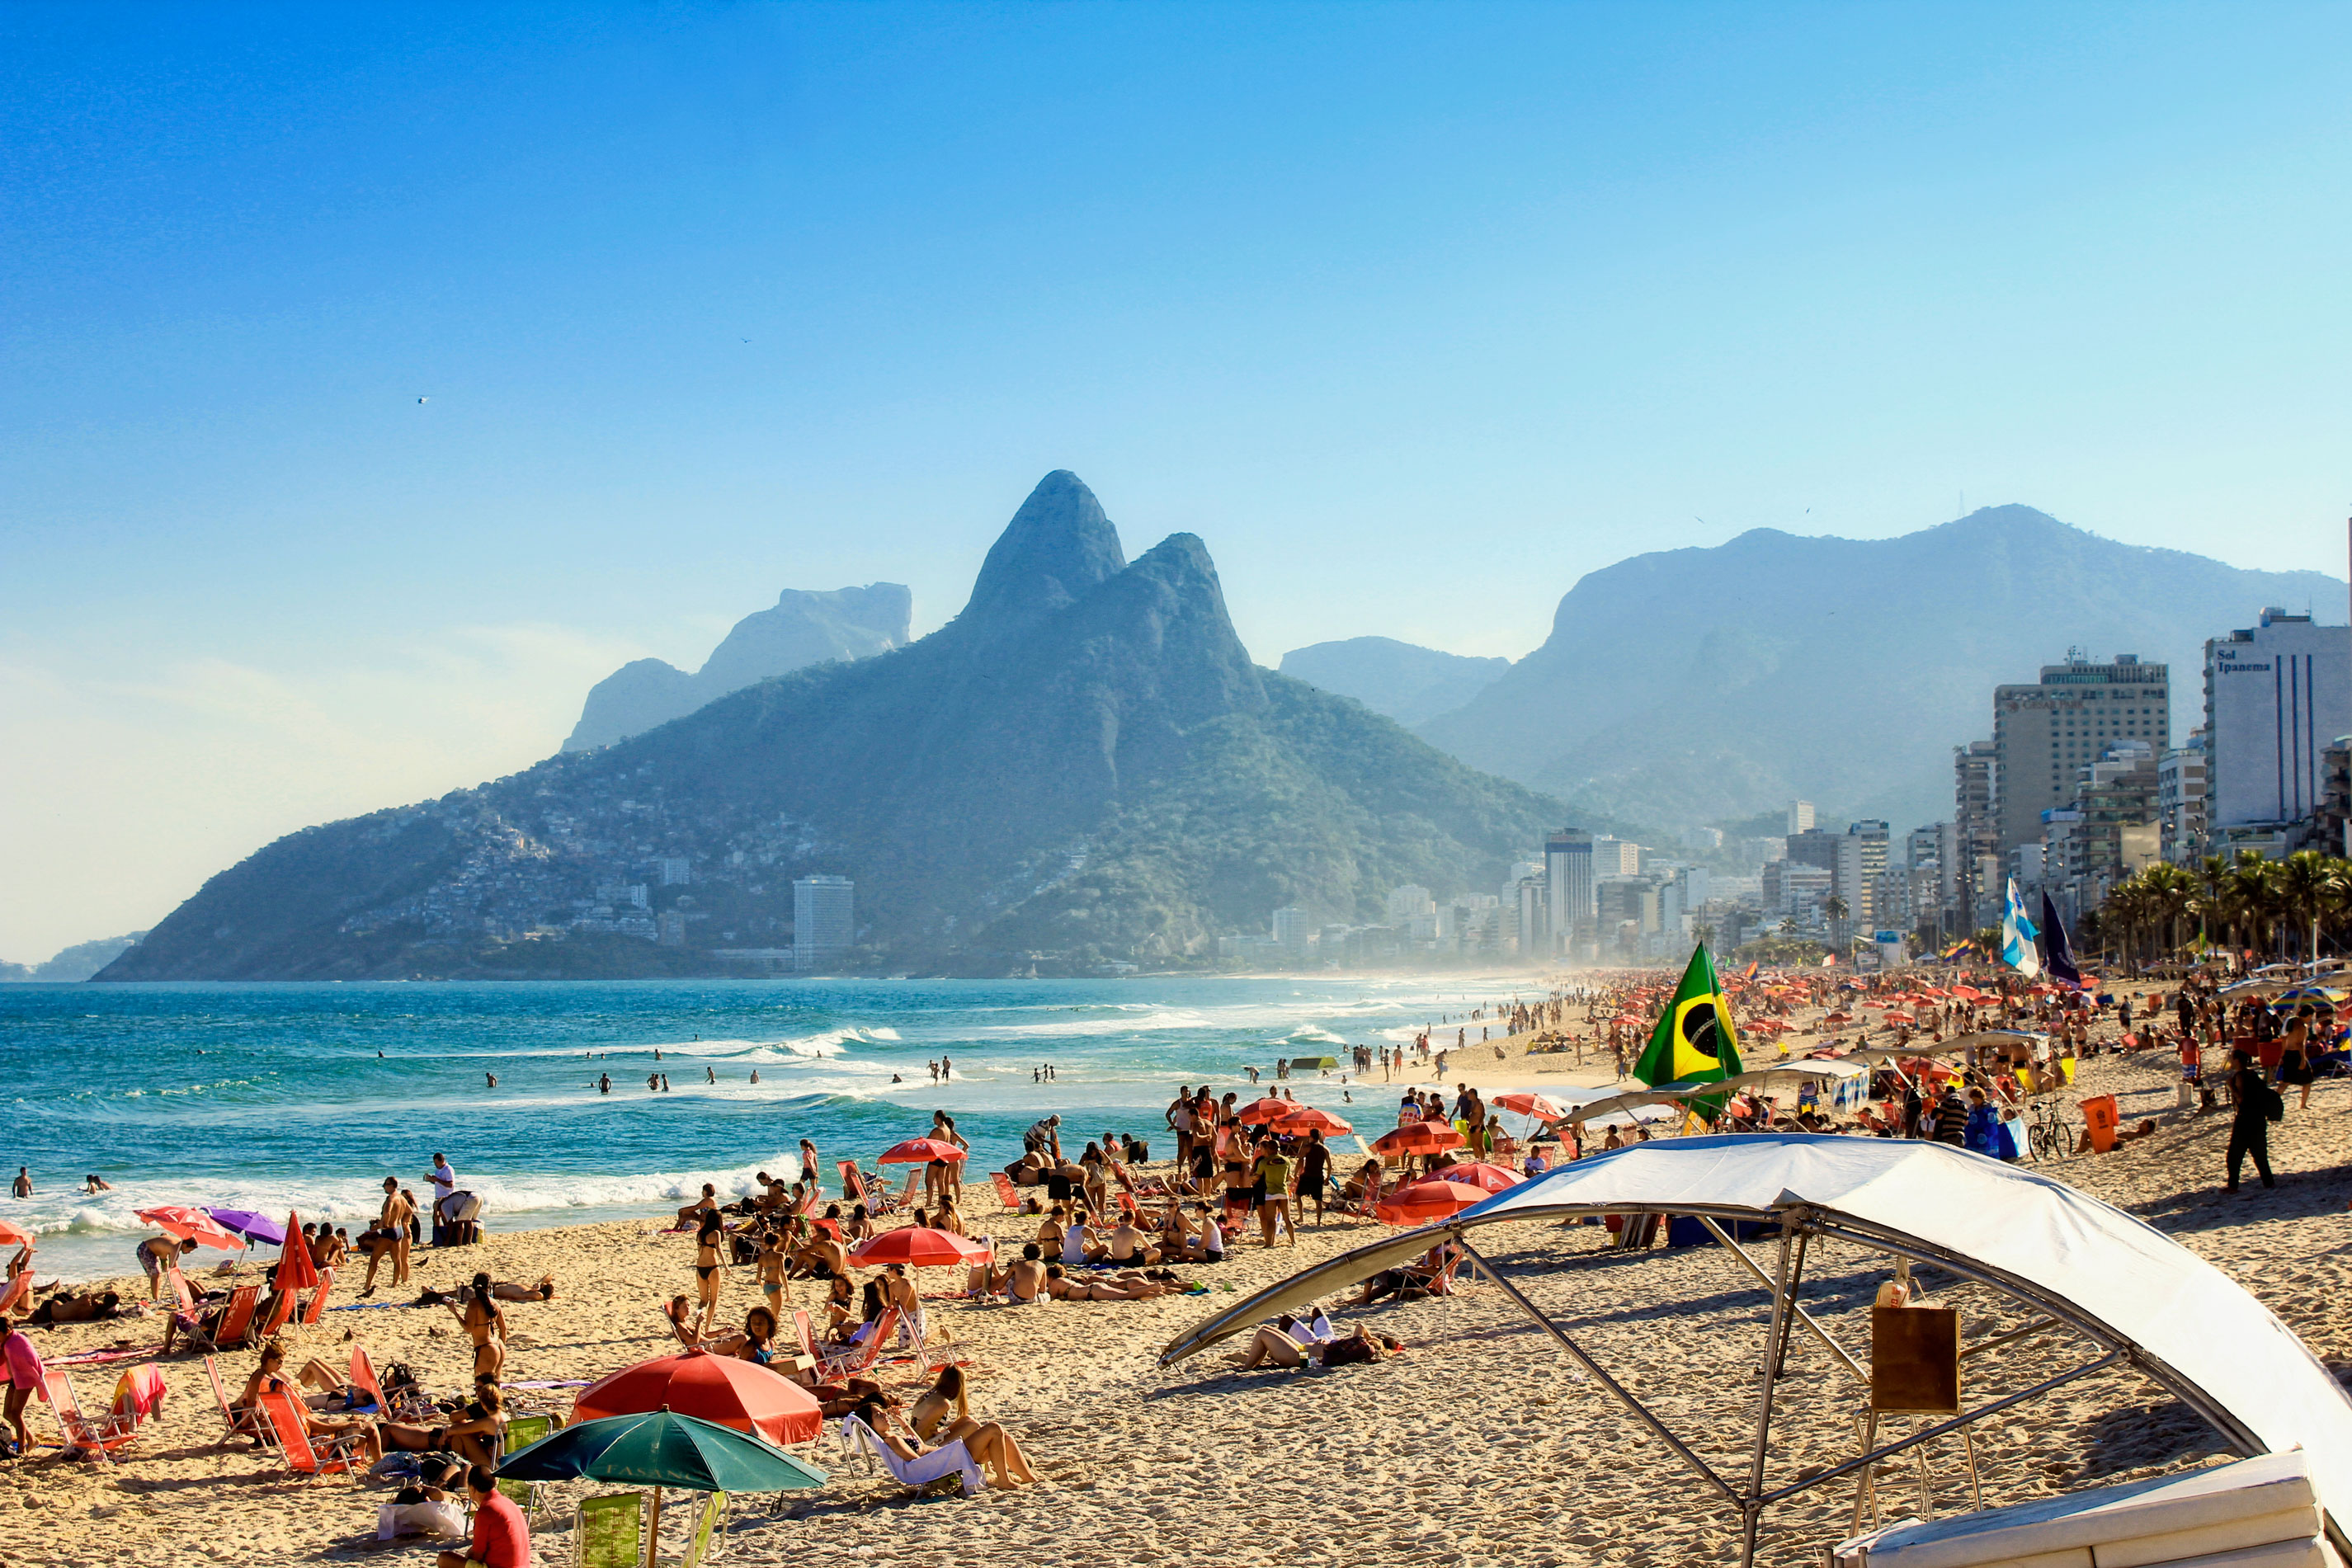 People at the beach in Rio de Janeiro